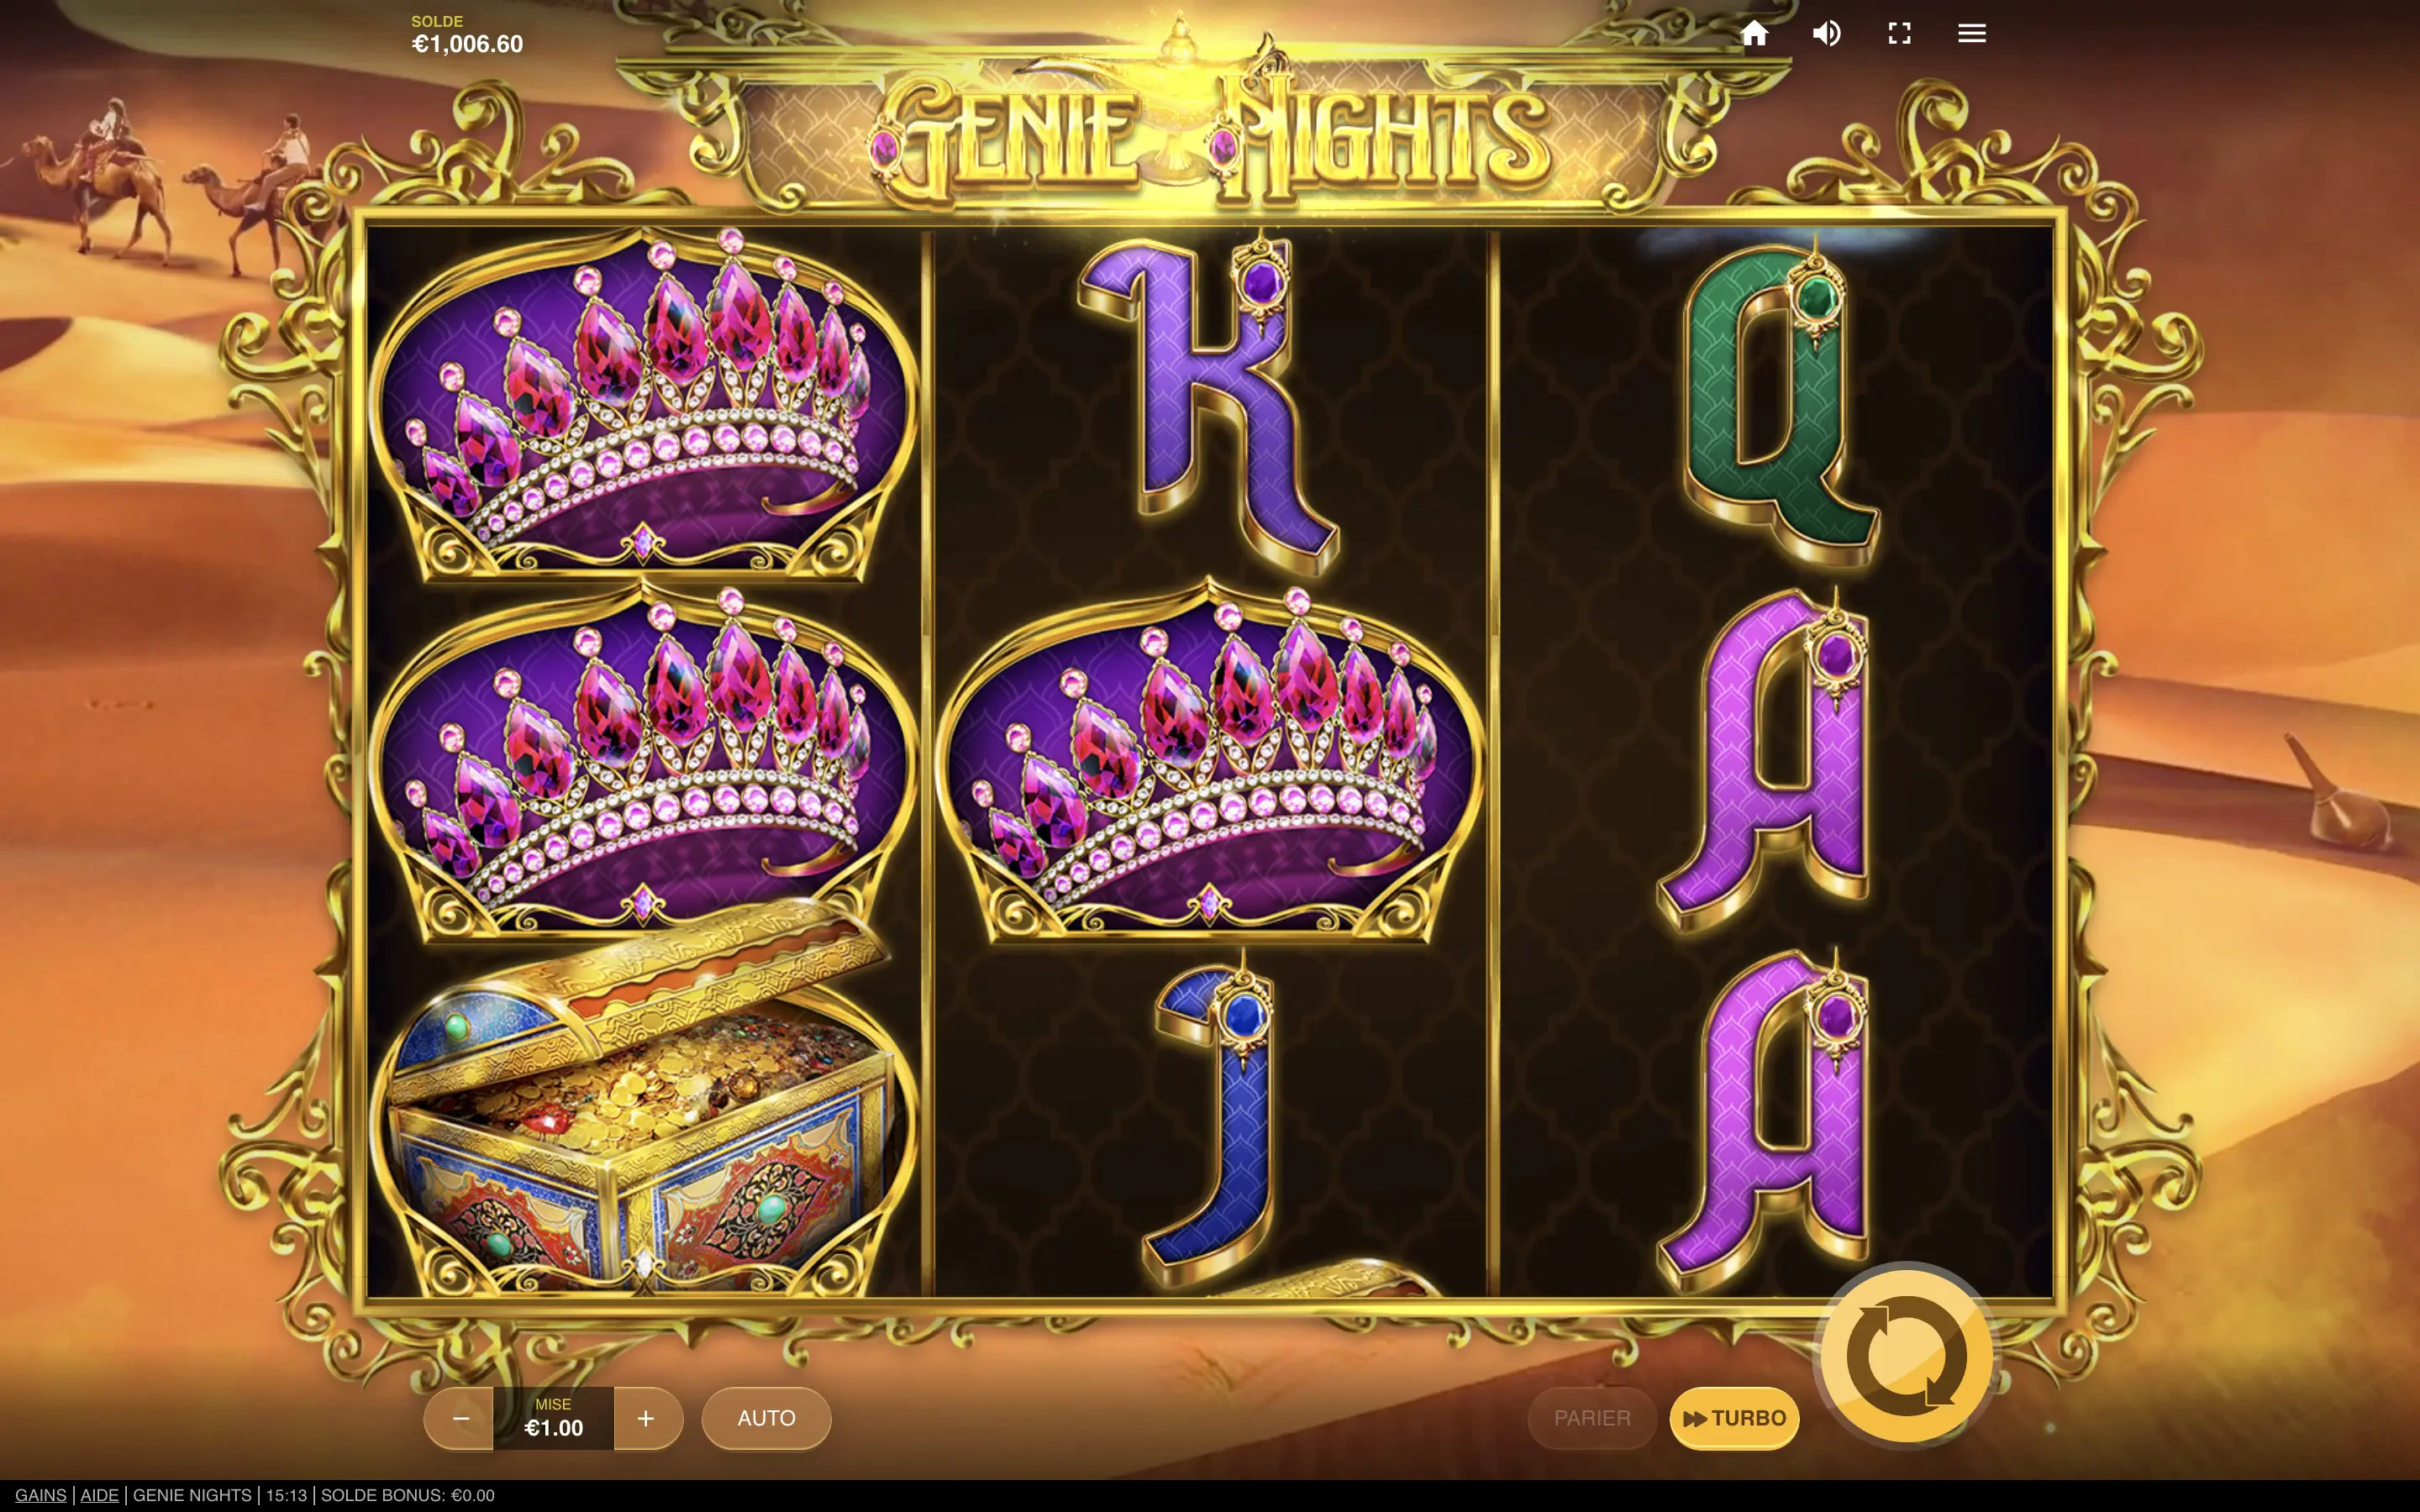 The Genie Nights slot machine by Red Tiger